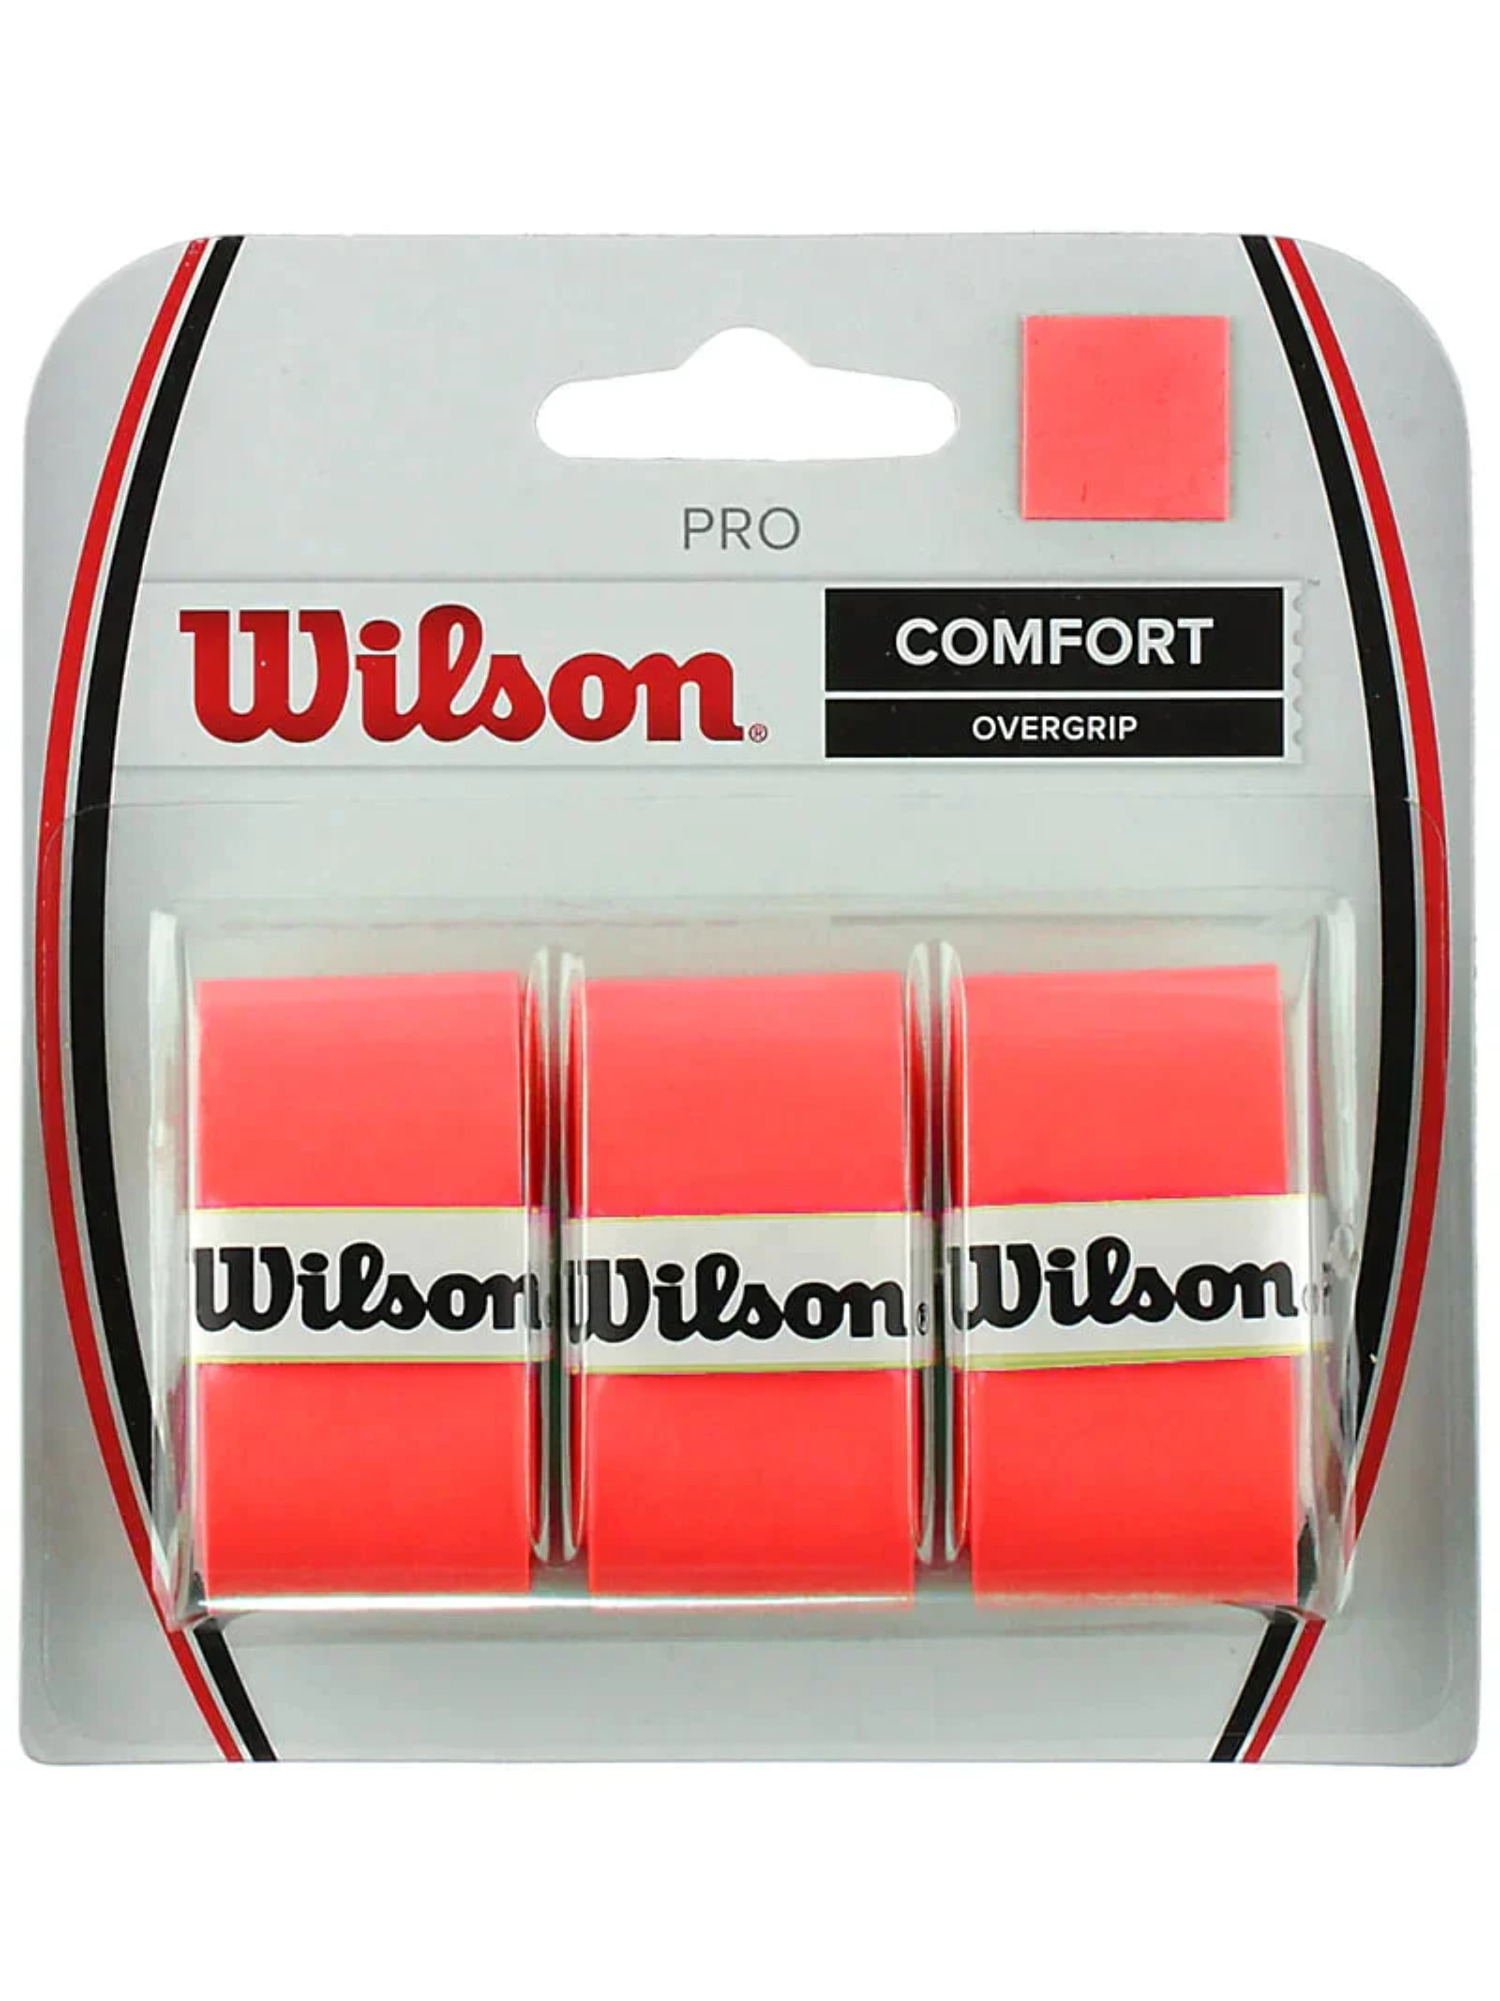 Wilson Pro Tennis Racquet Over Grip, Pack of 3 (Pink) - image 2 of 2